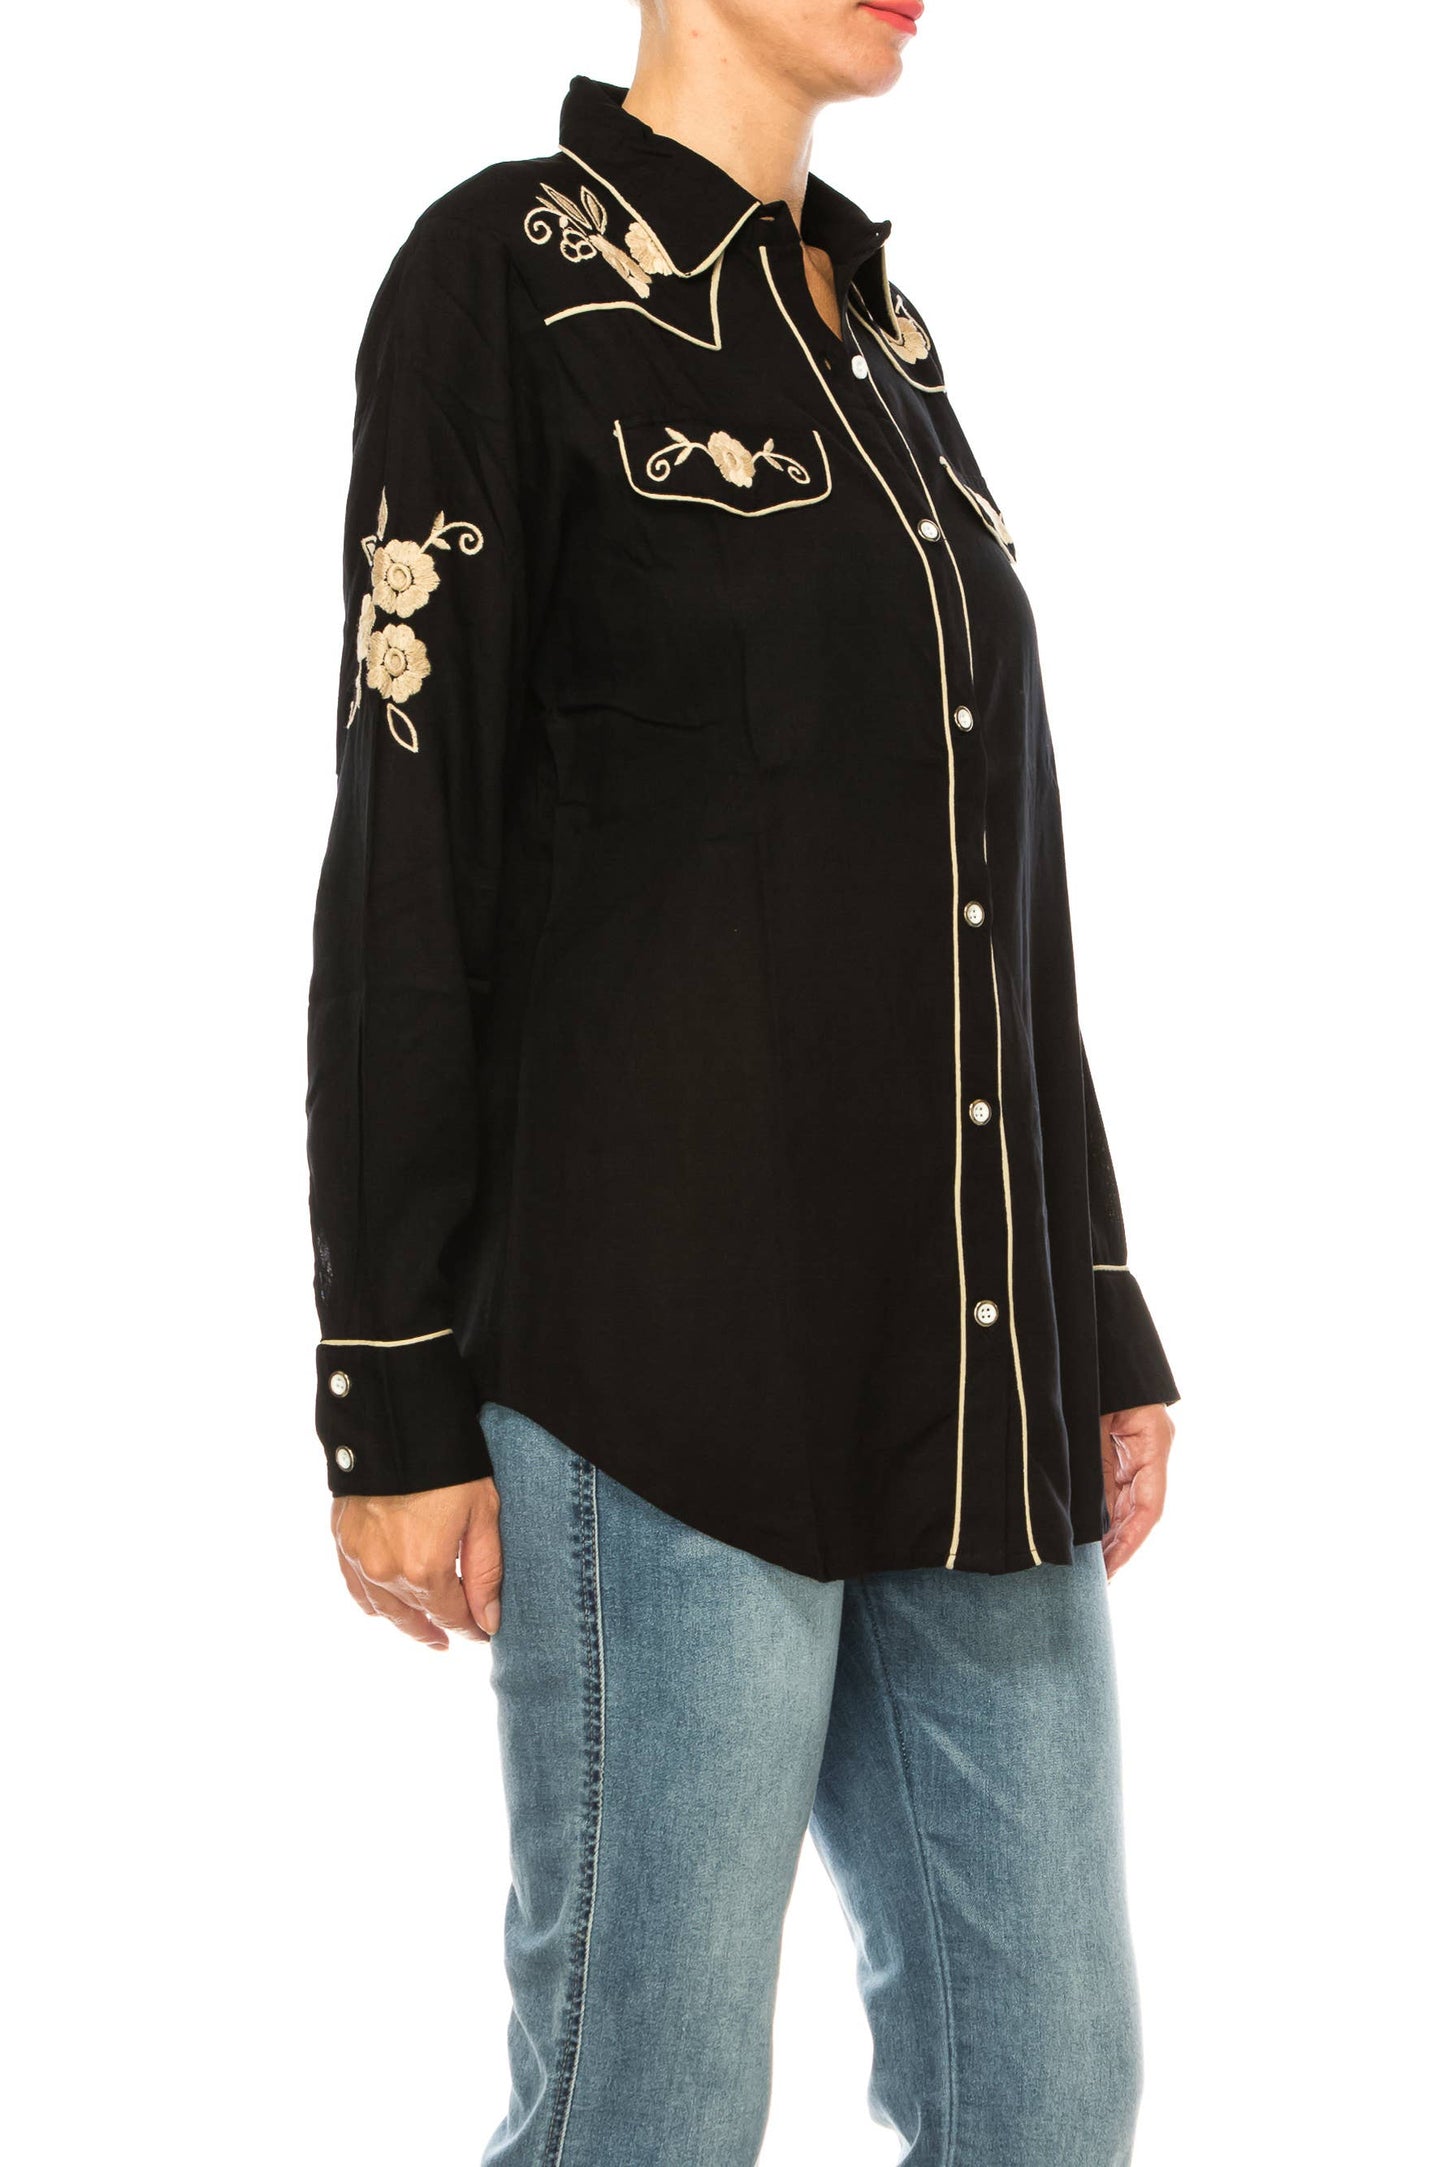 Magazine Clothing - Black Western Shirt with Embroidery: X-Large